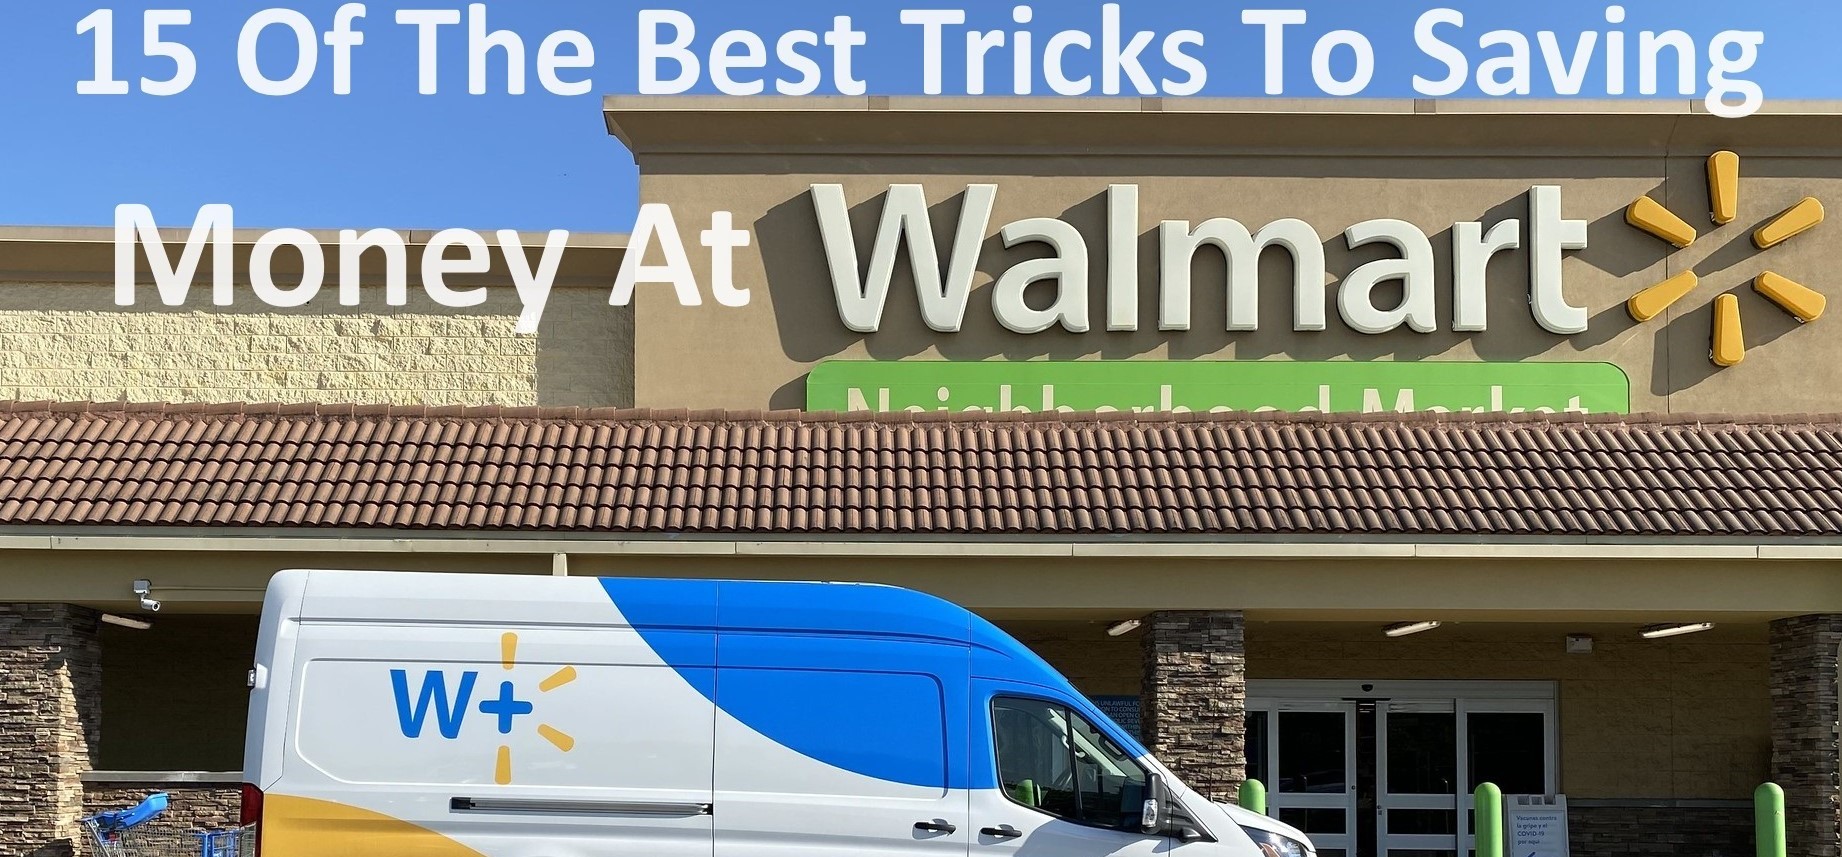 15 of the Best Tricks to Saving Money at Walmart